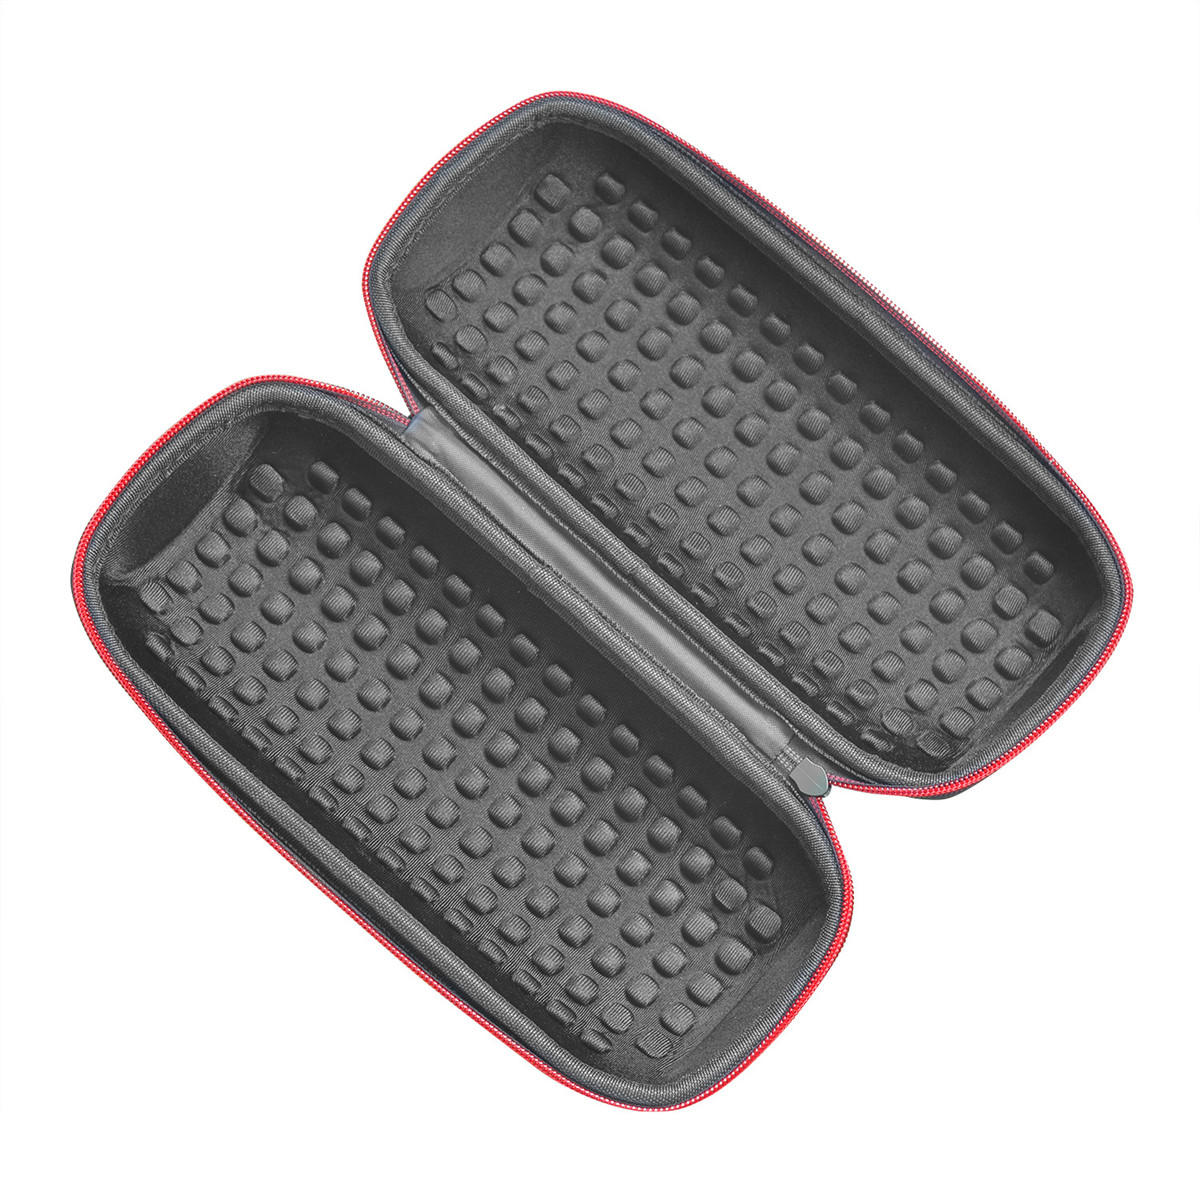 Nylon Speaker Case Storage Bag for Pulse 4 Speaker Shockproof Anti-scratch Protective Cover COD